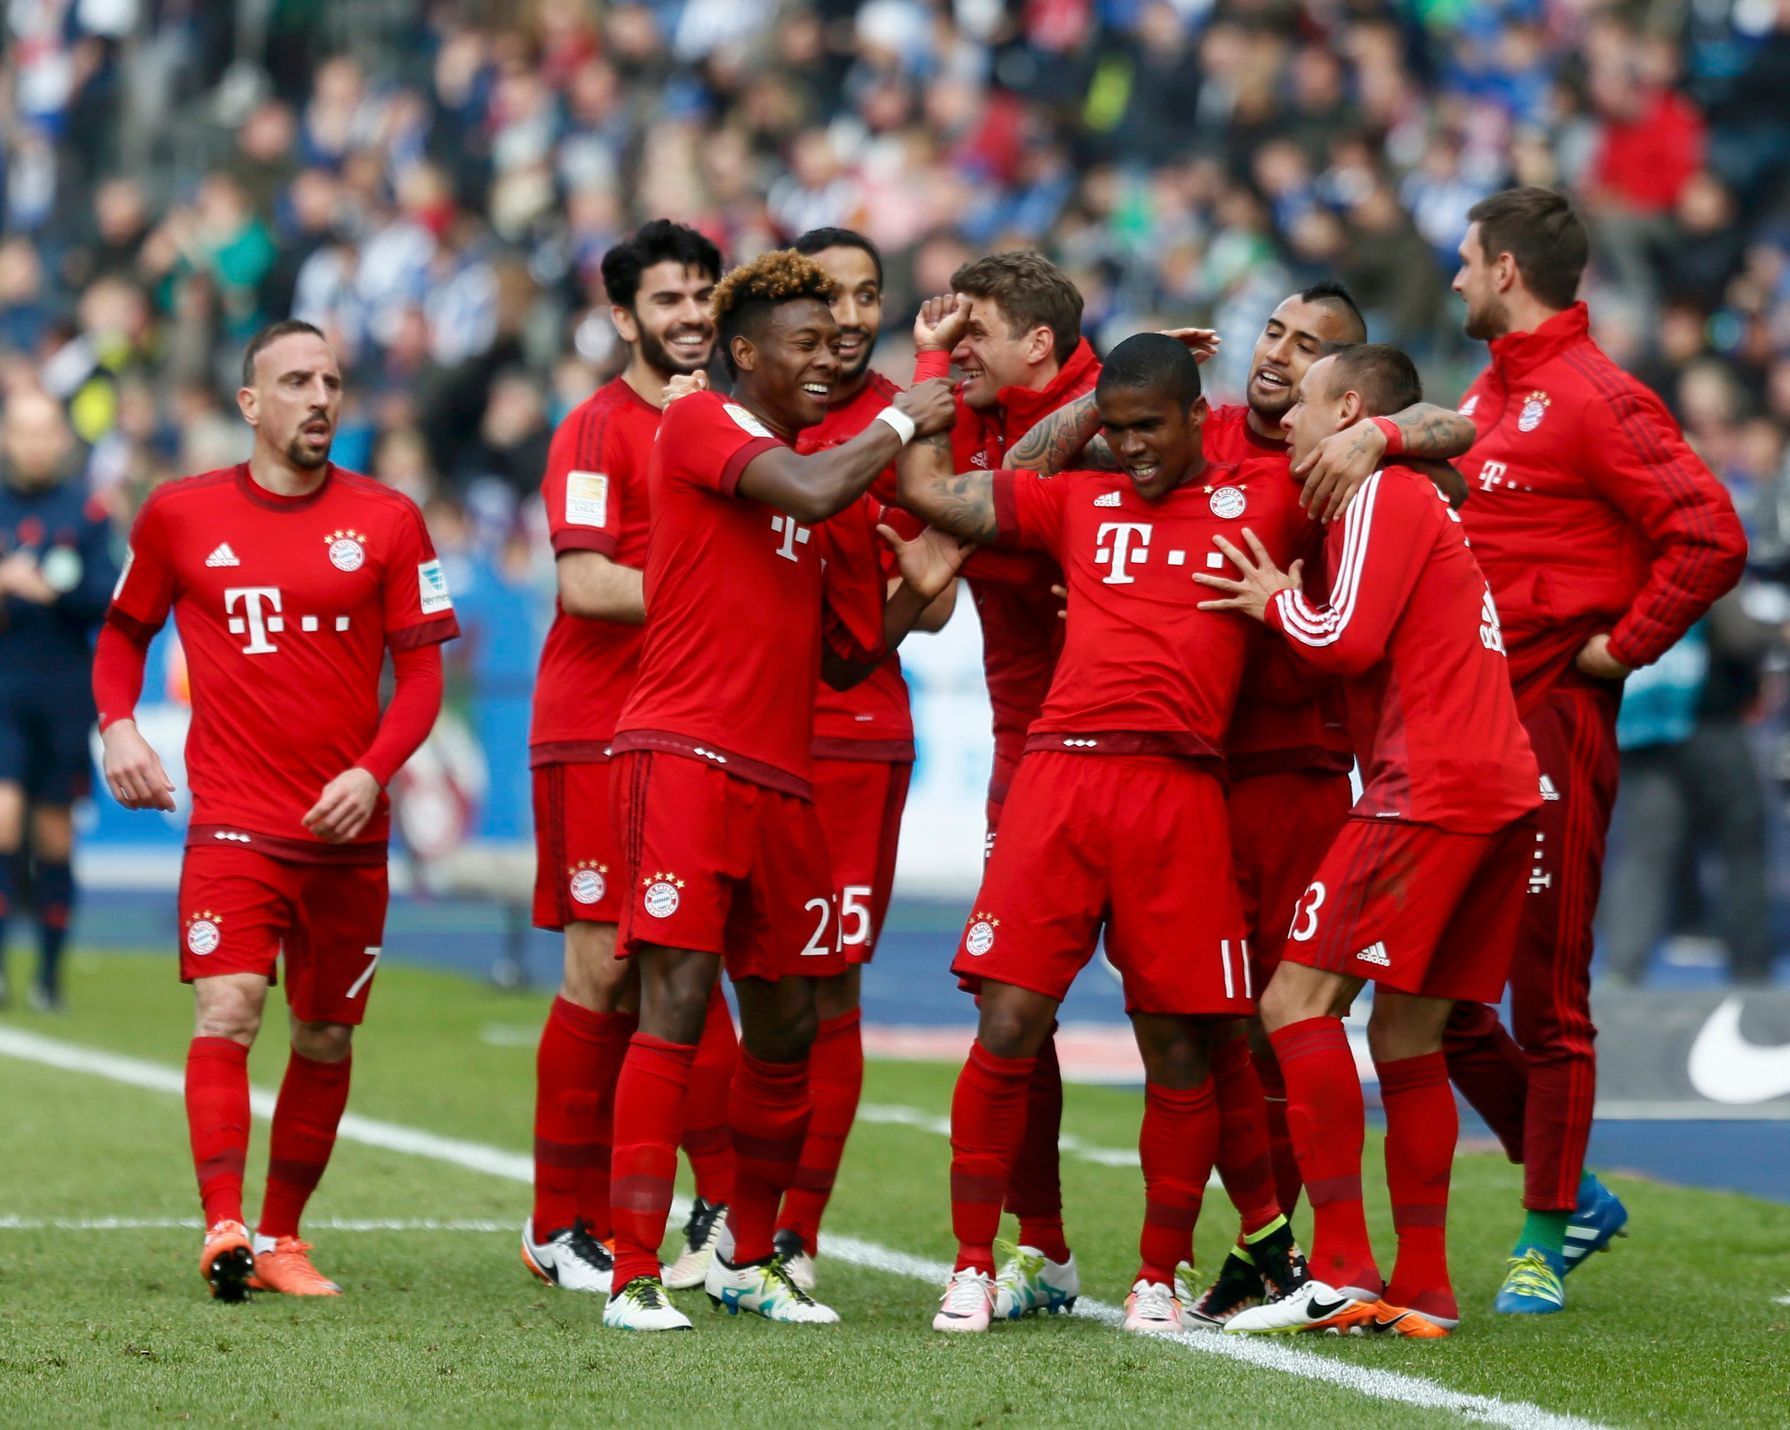 Radost fotbalistů Bayernu Mnichov